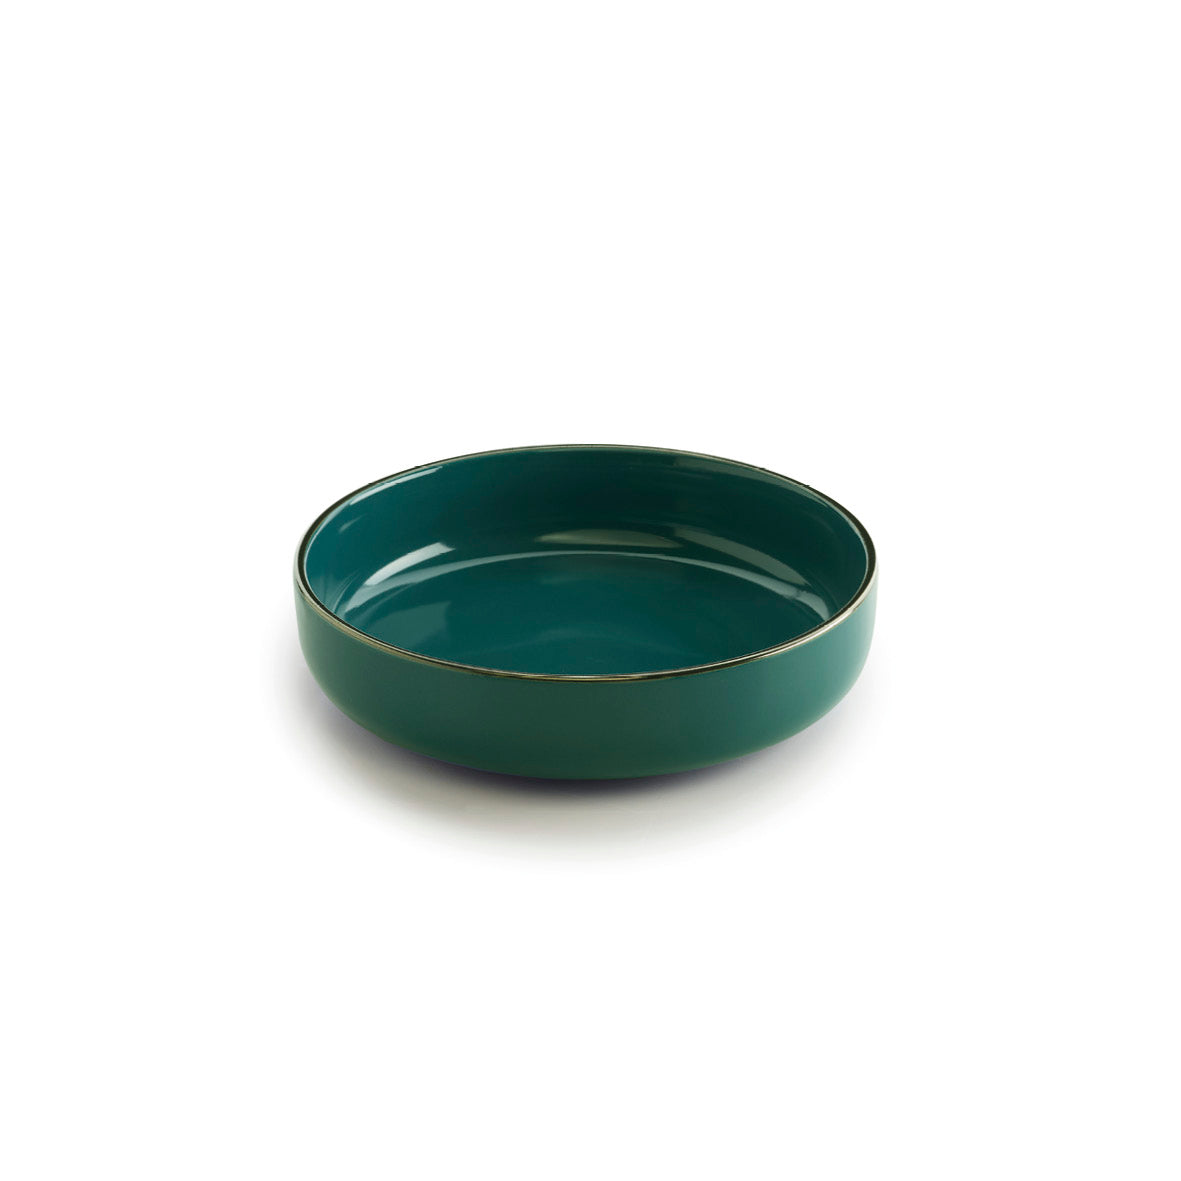 Porcelain dinnerware set 24 pieces embossed - Dark green